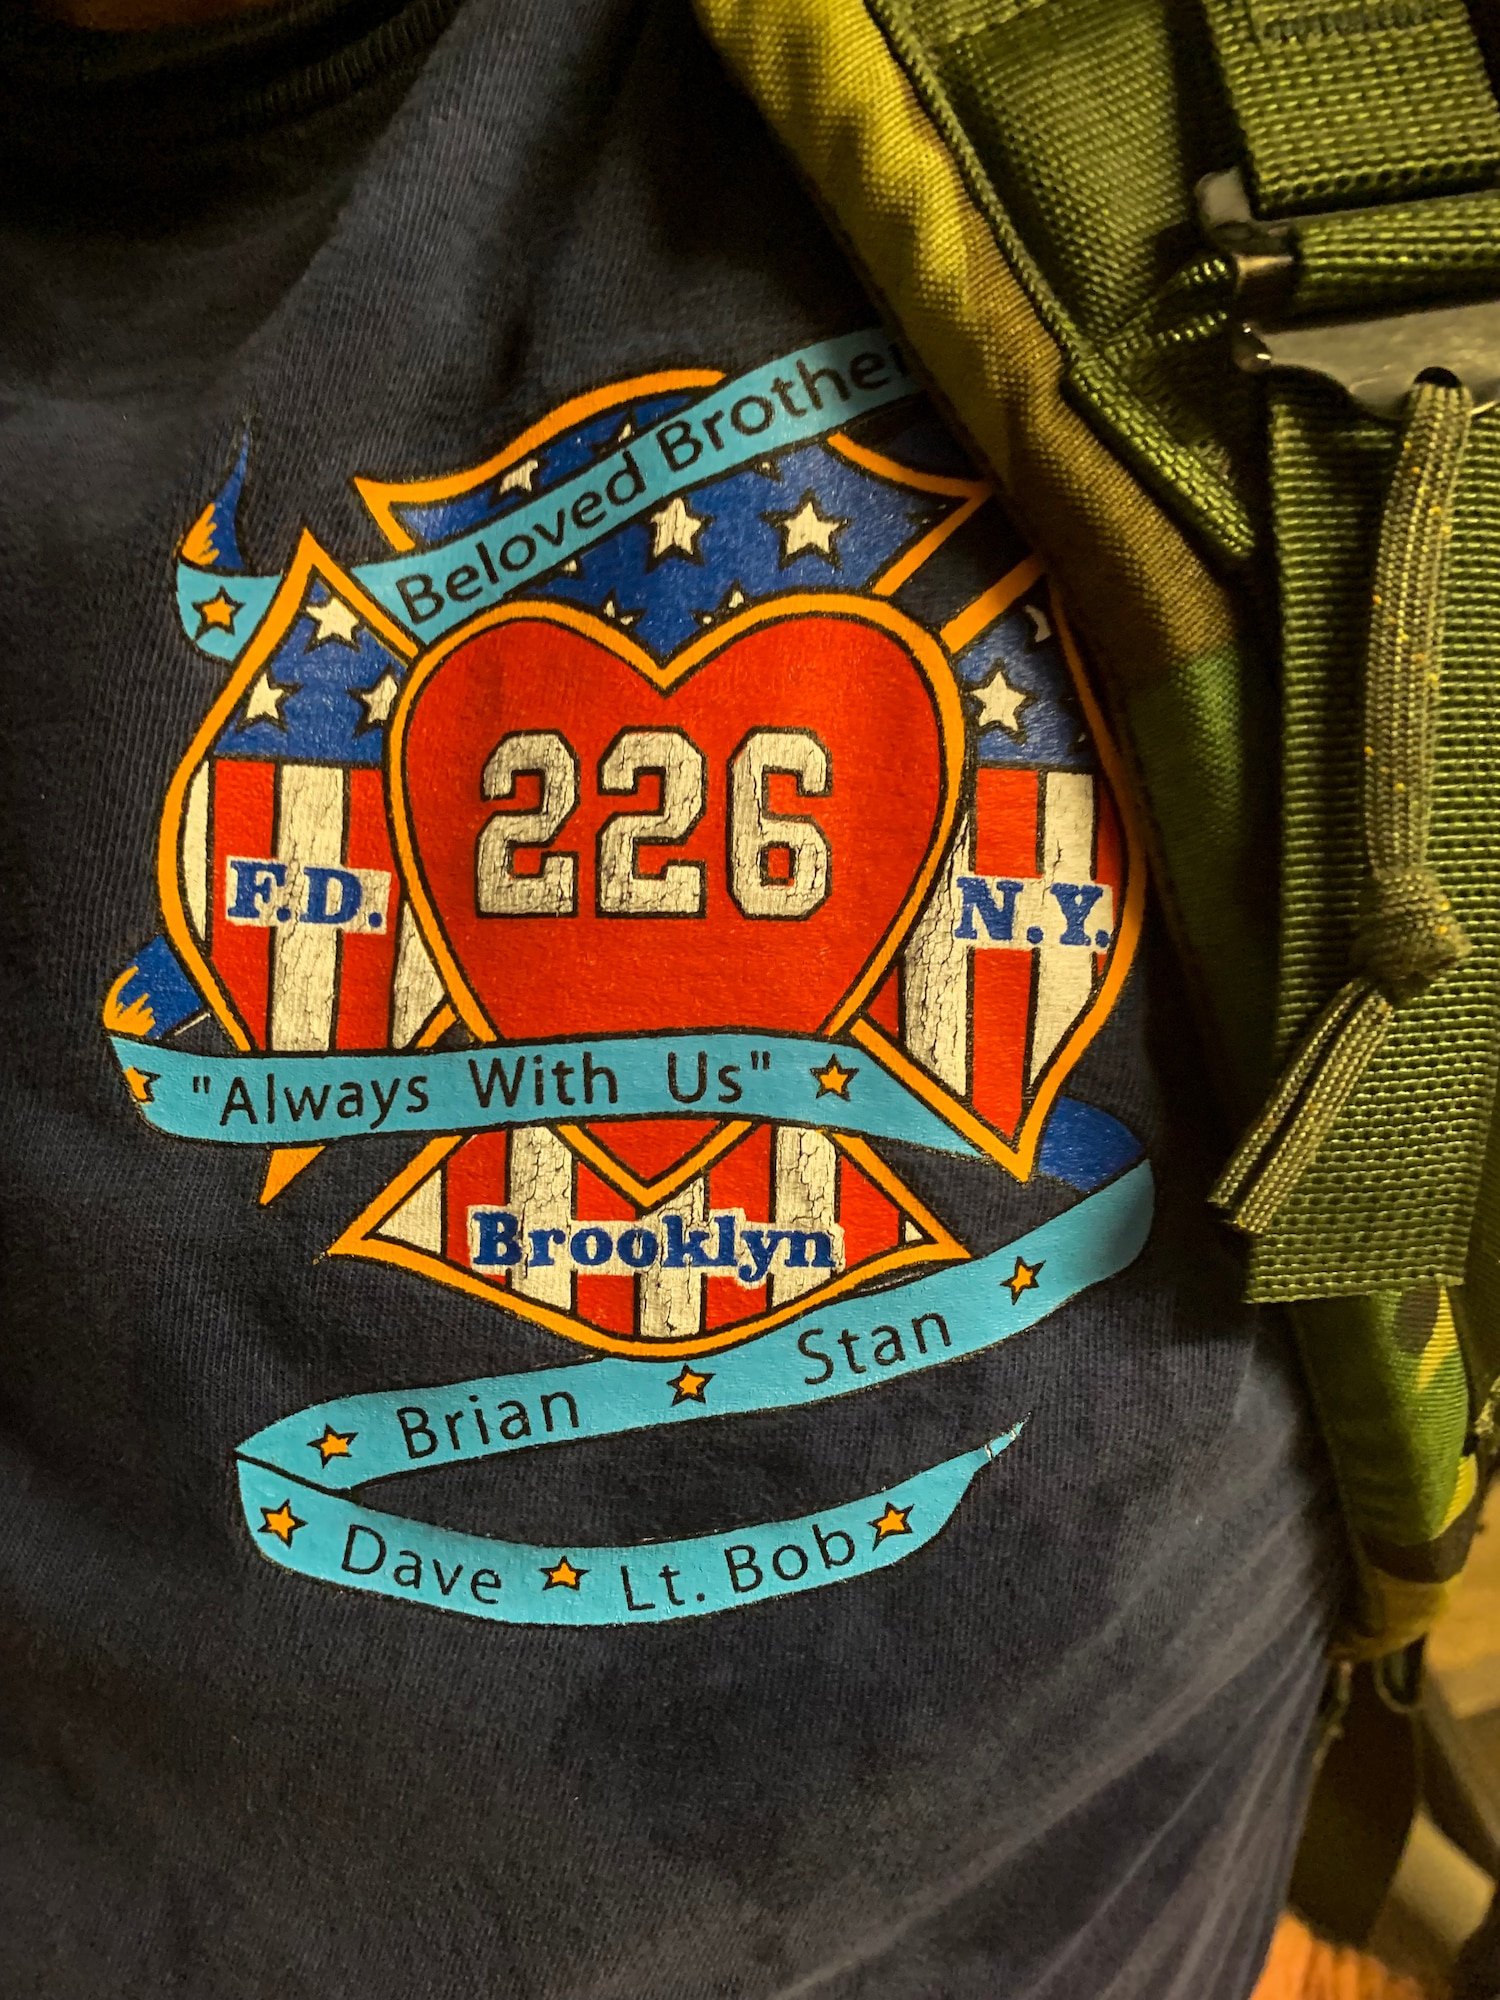 T-shirt emblem honoring Engine 226